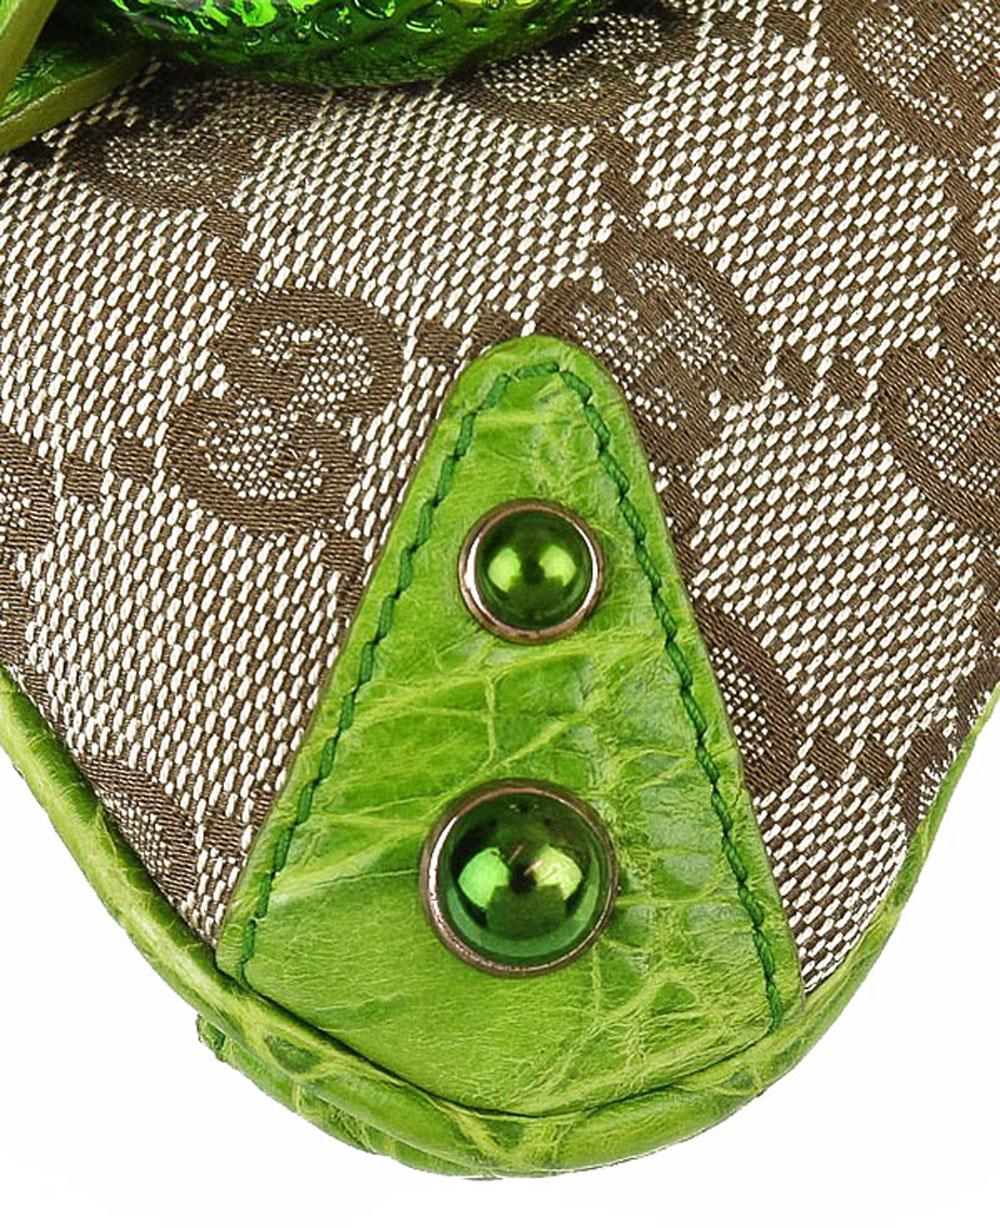  Tom Ford for GUCCI 2004 Crocodile Trimmed Horsebit Jeweled Serpent Clutch Bag 4